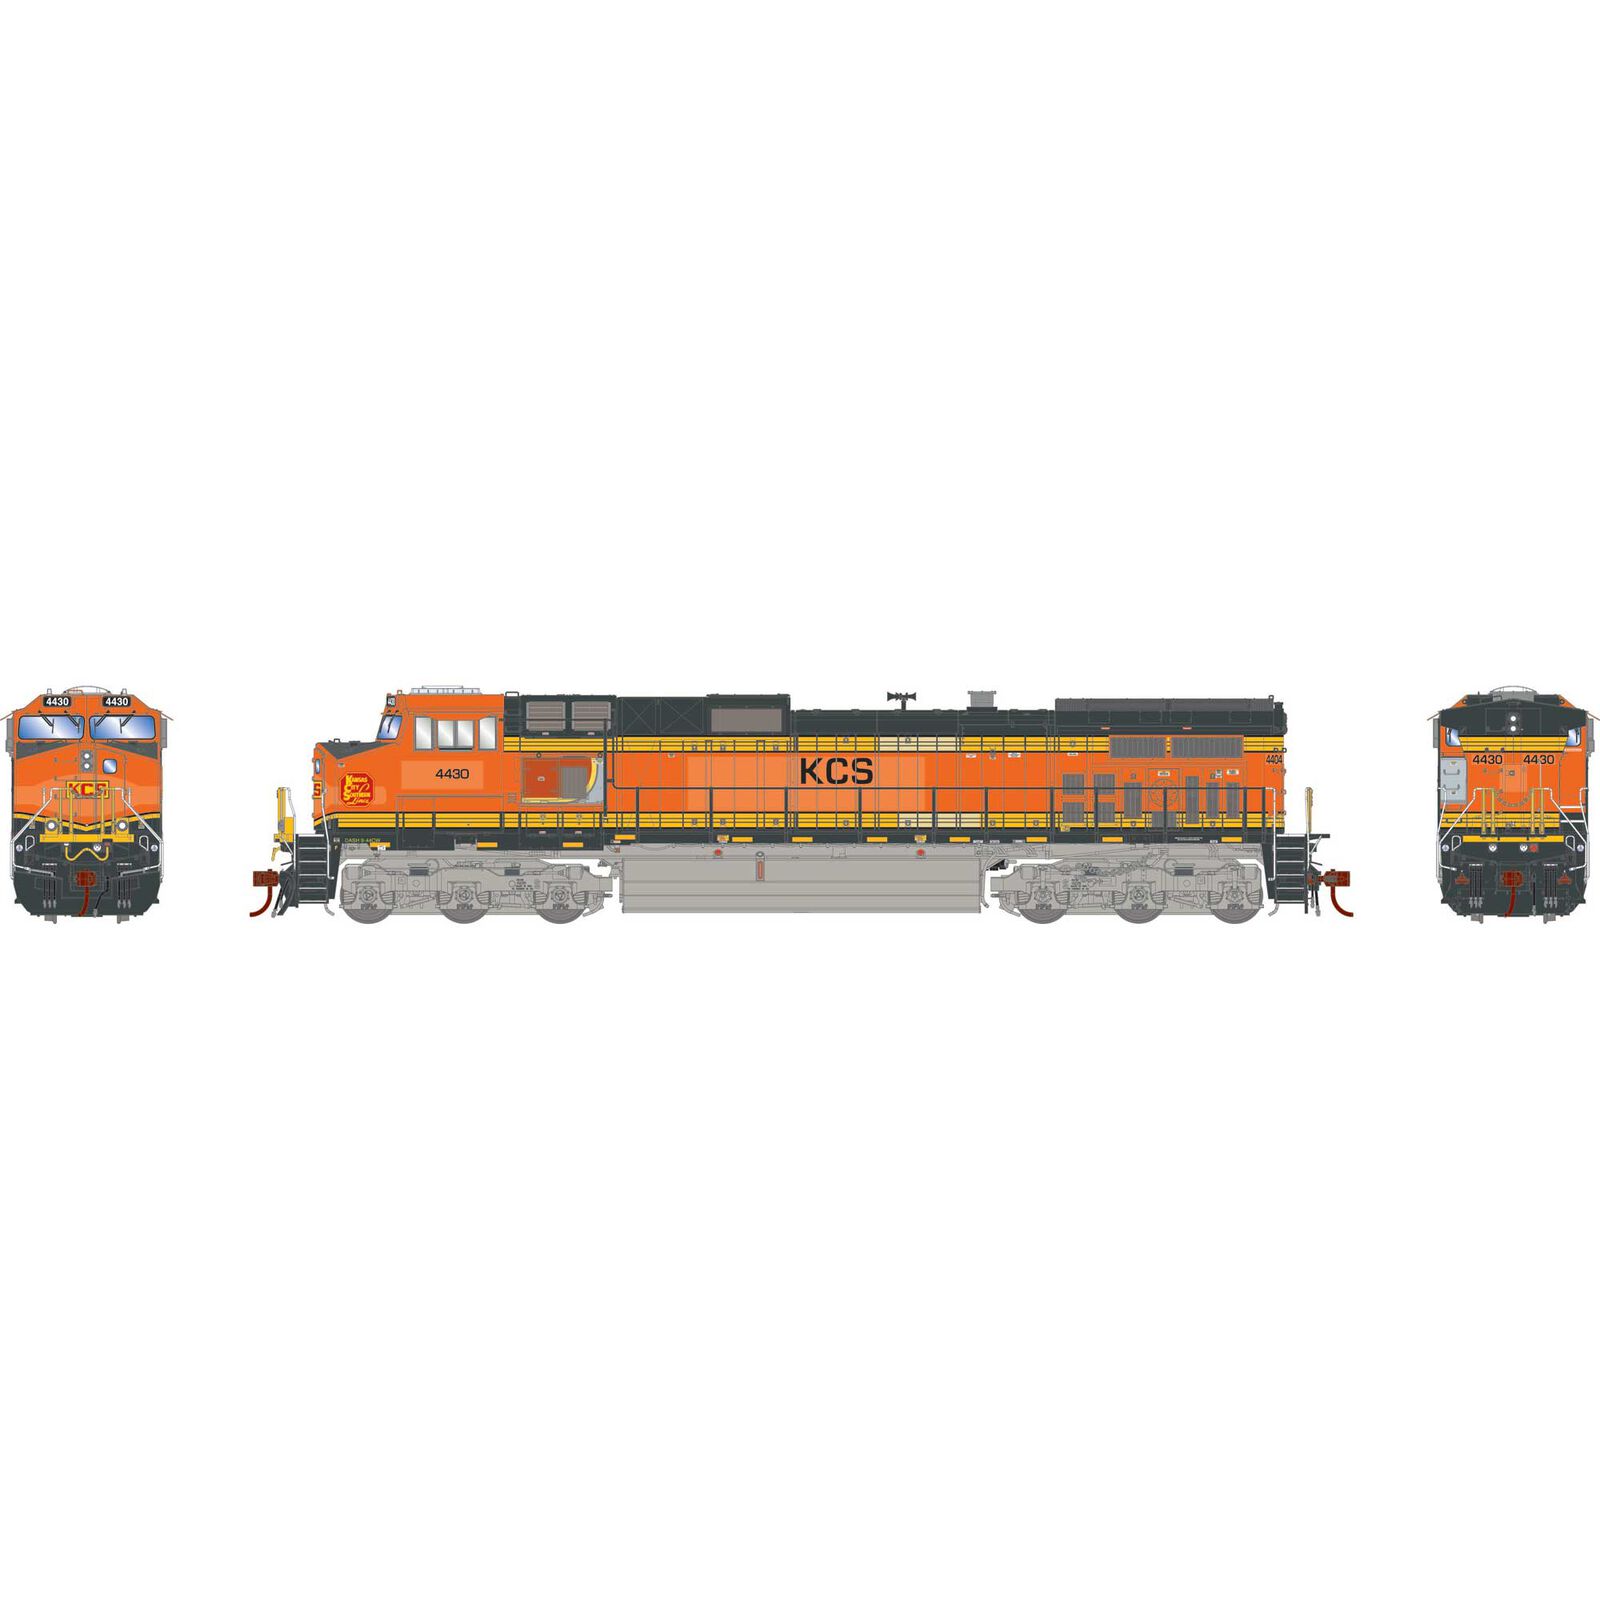 HO Dash 9-44CW Locomotive with DCC & Sound, KCS #4430